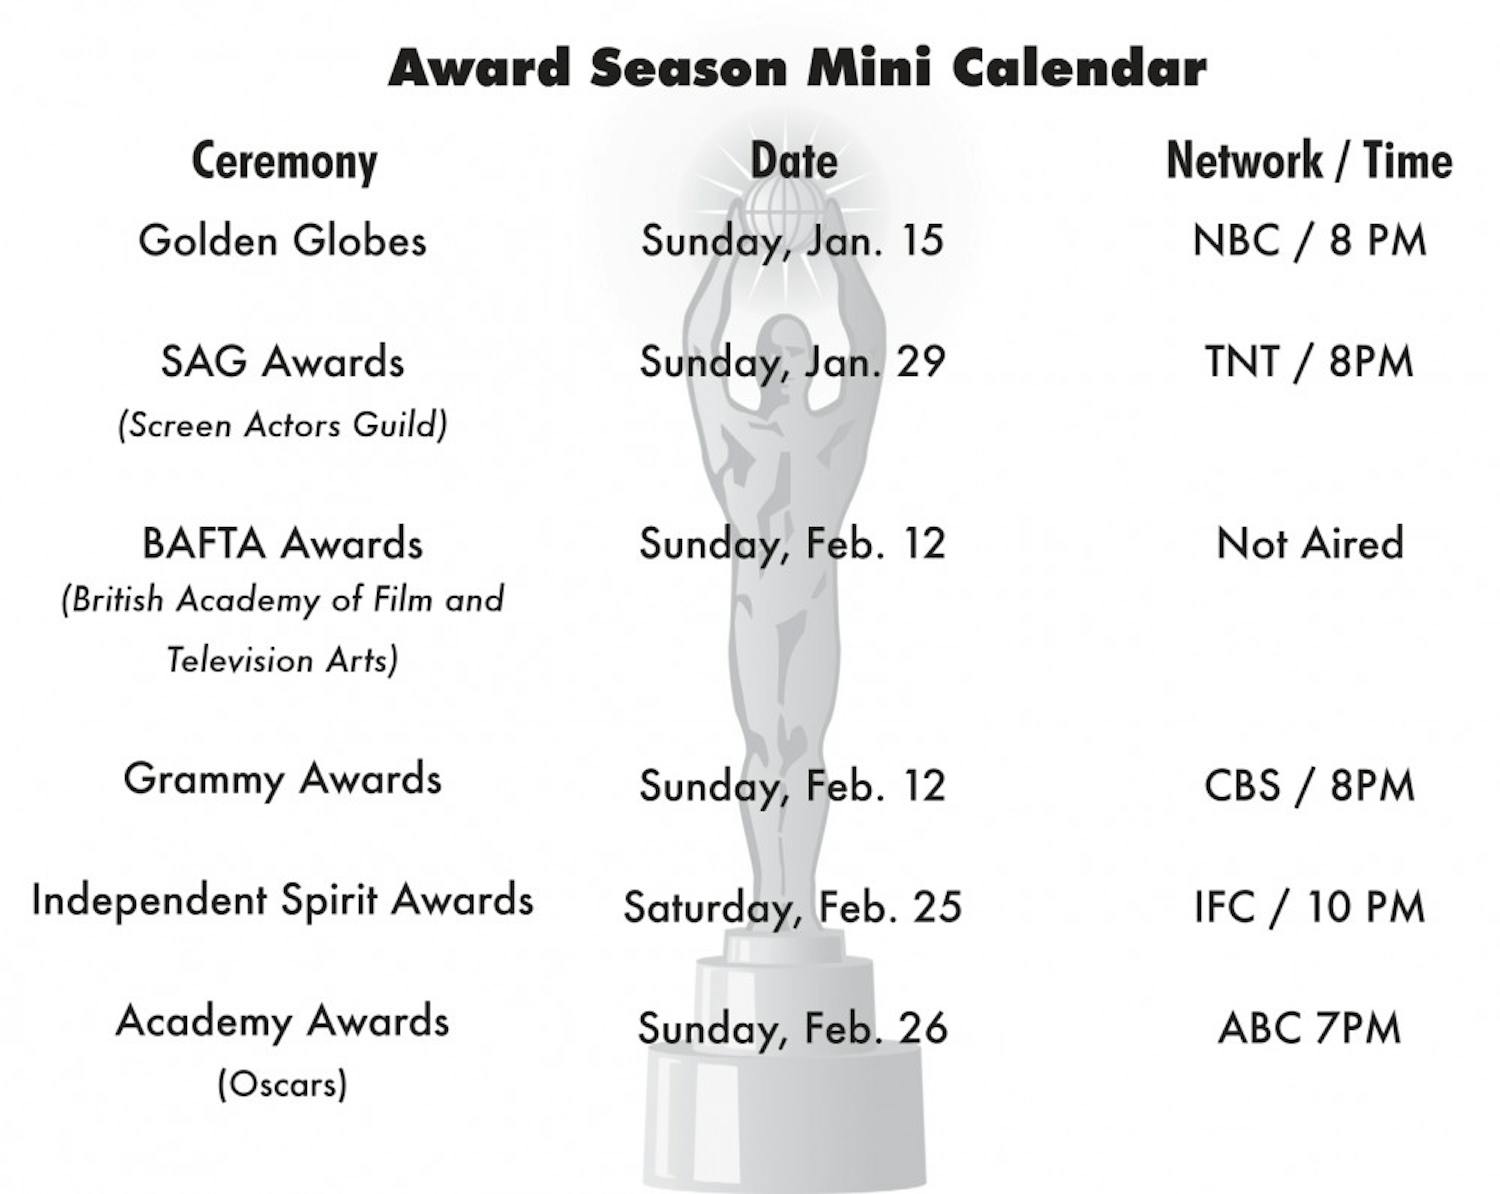 Award season mini calendar